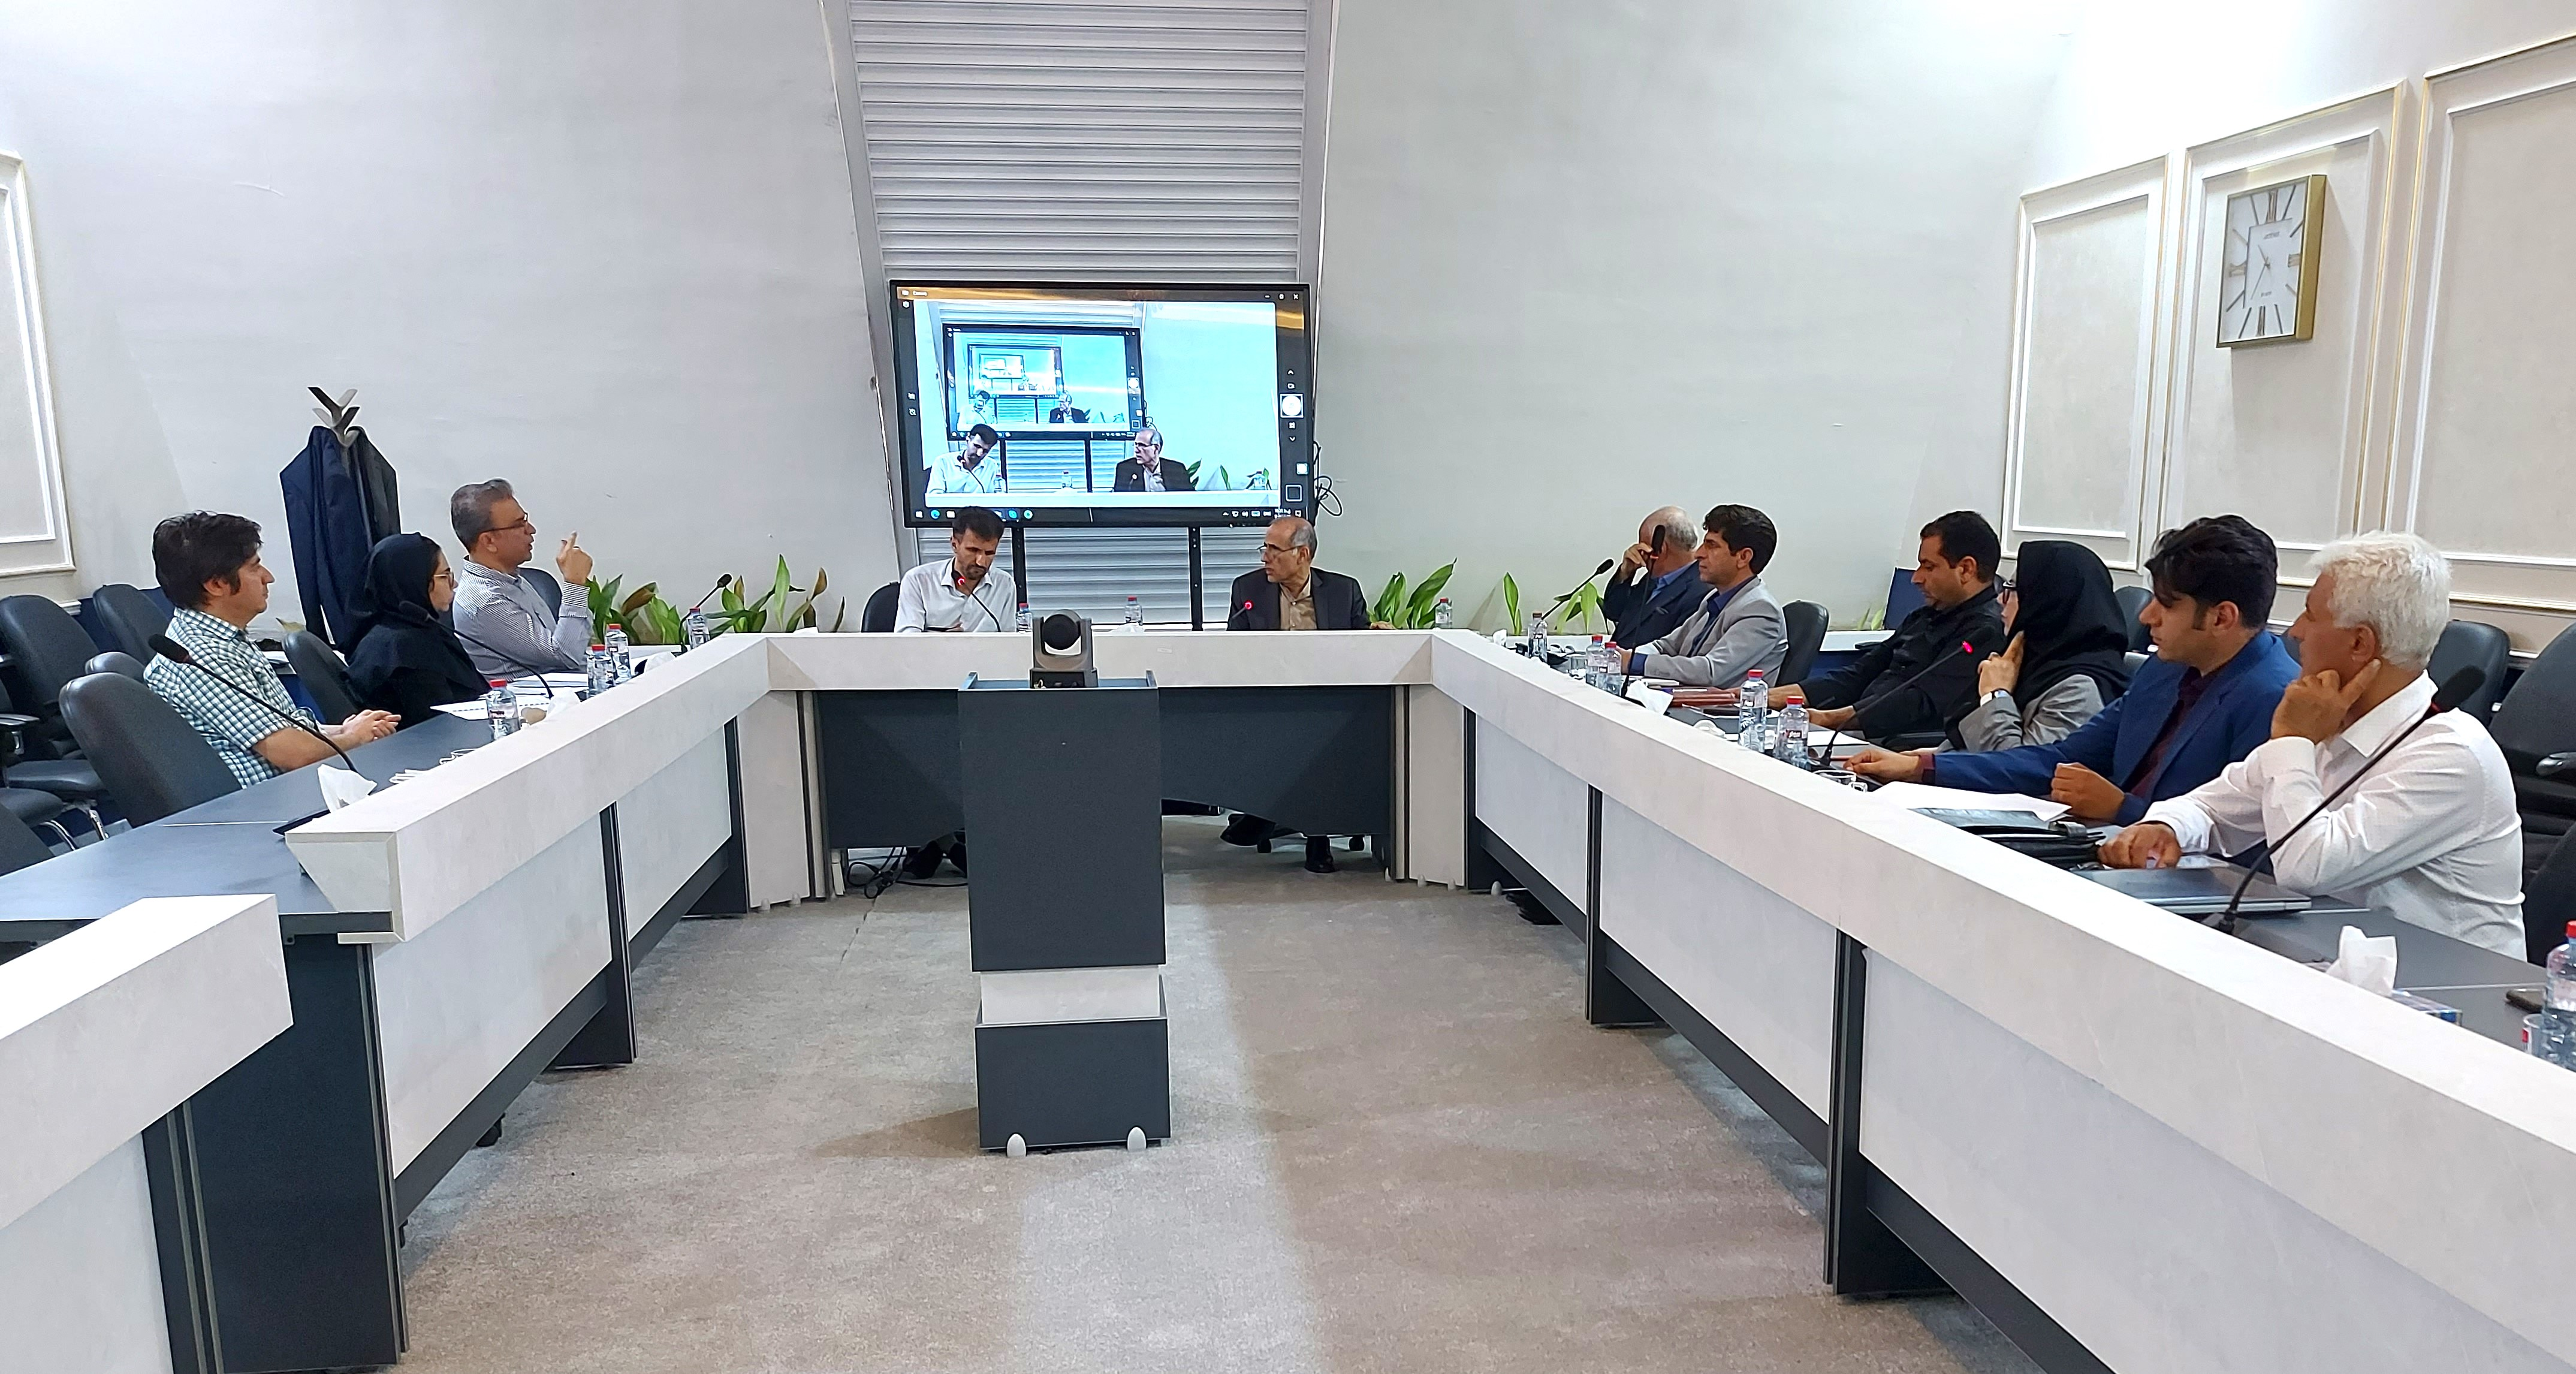 Holding of the annual general meeting of the Omran Kar Sirjan company